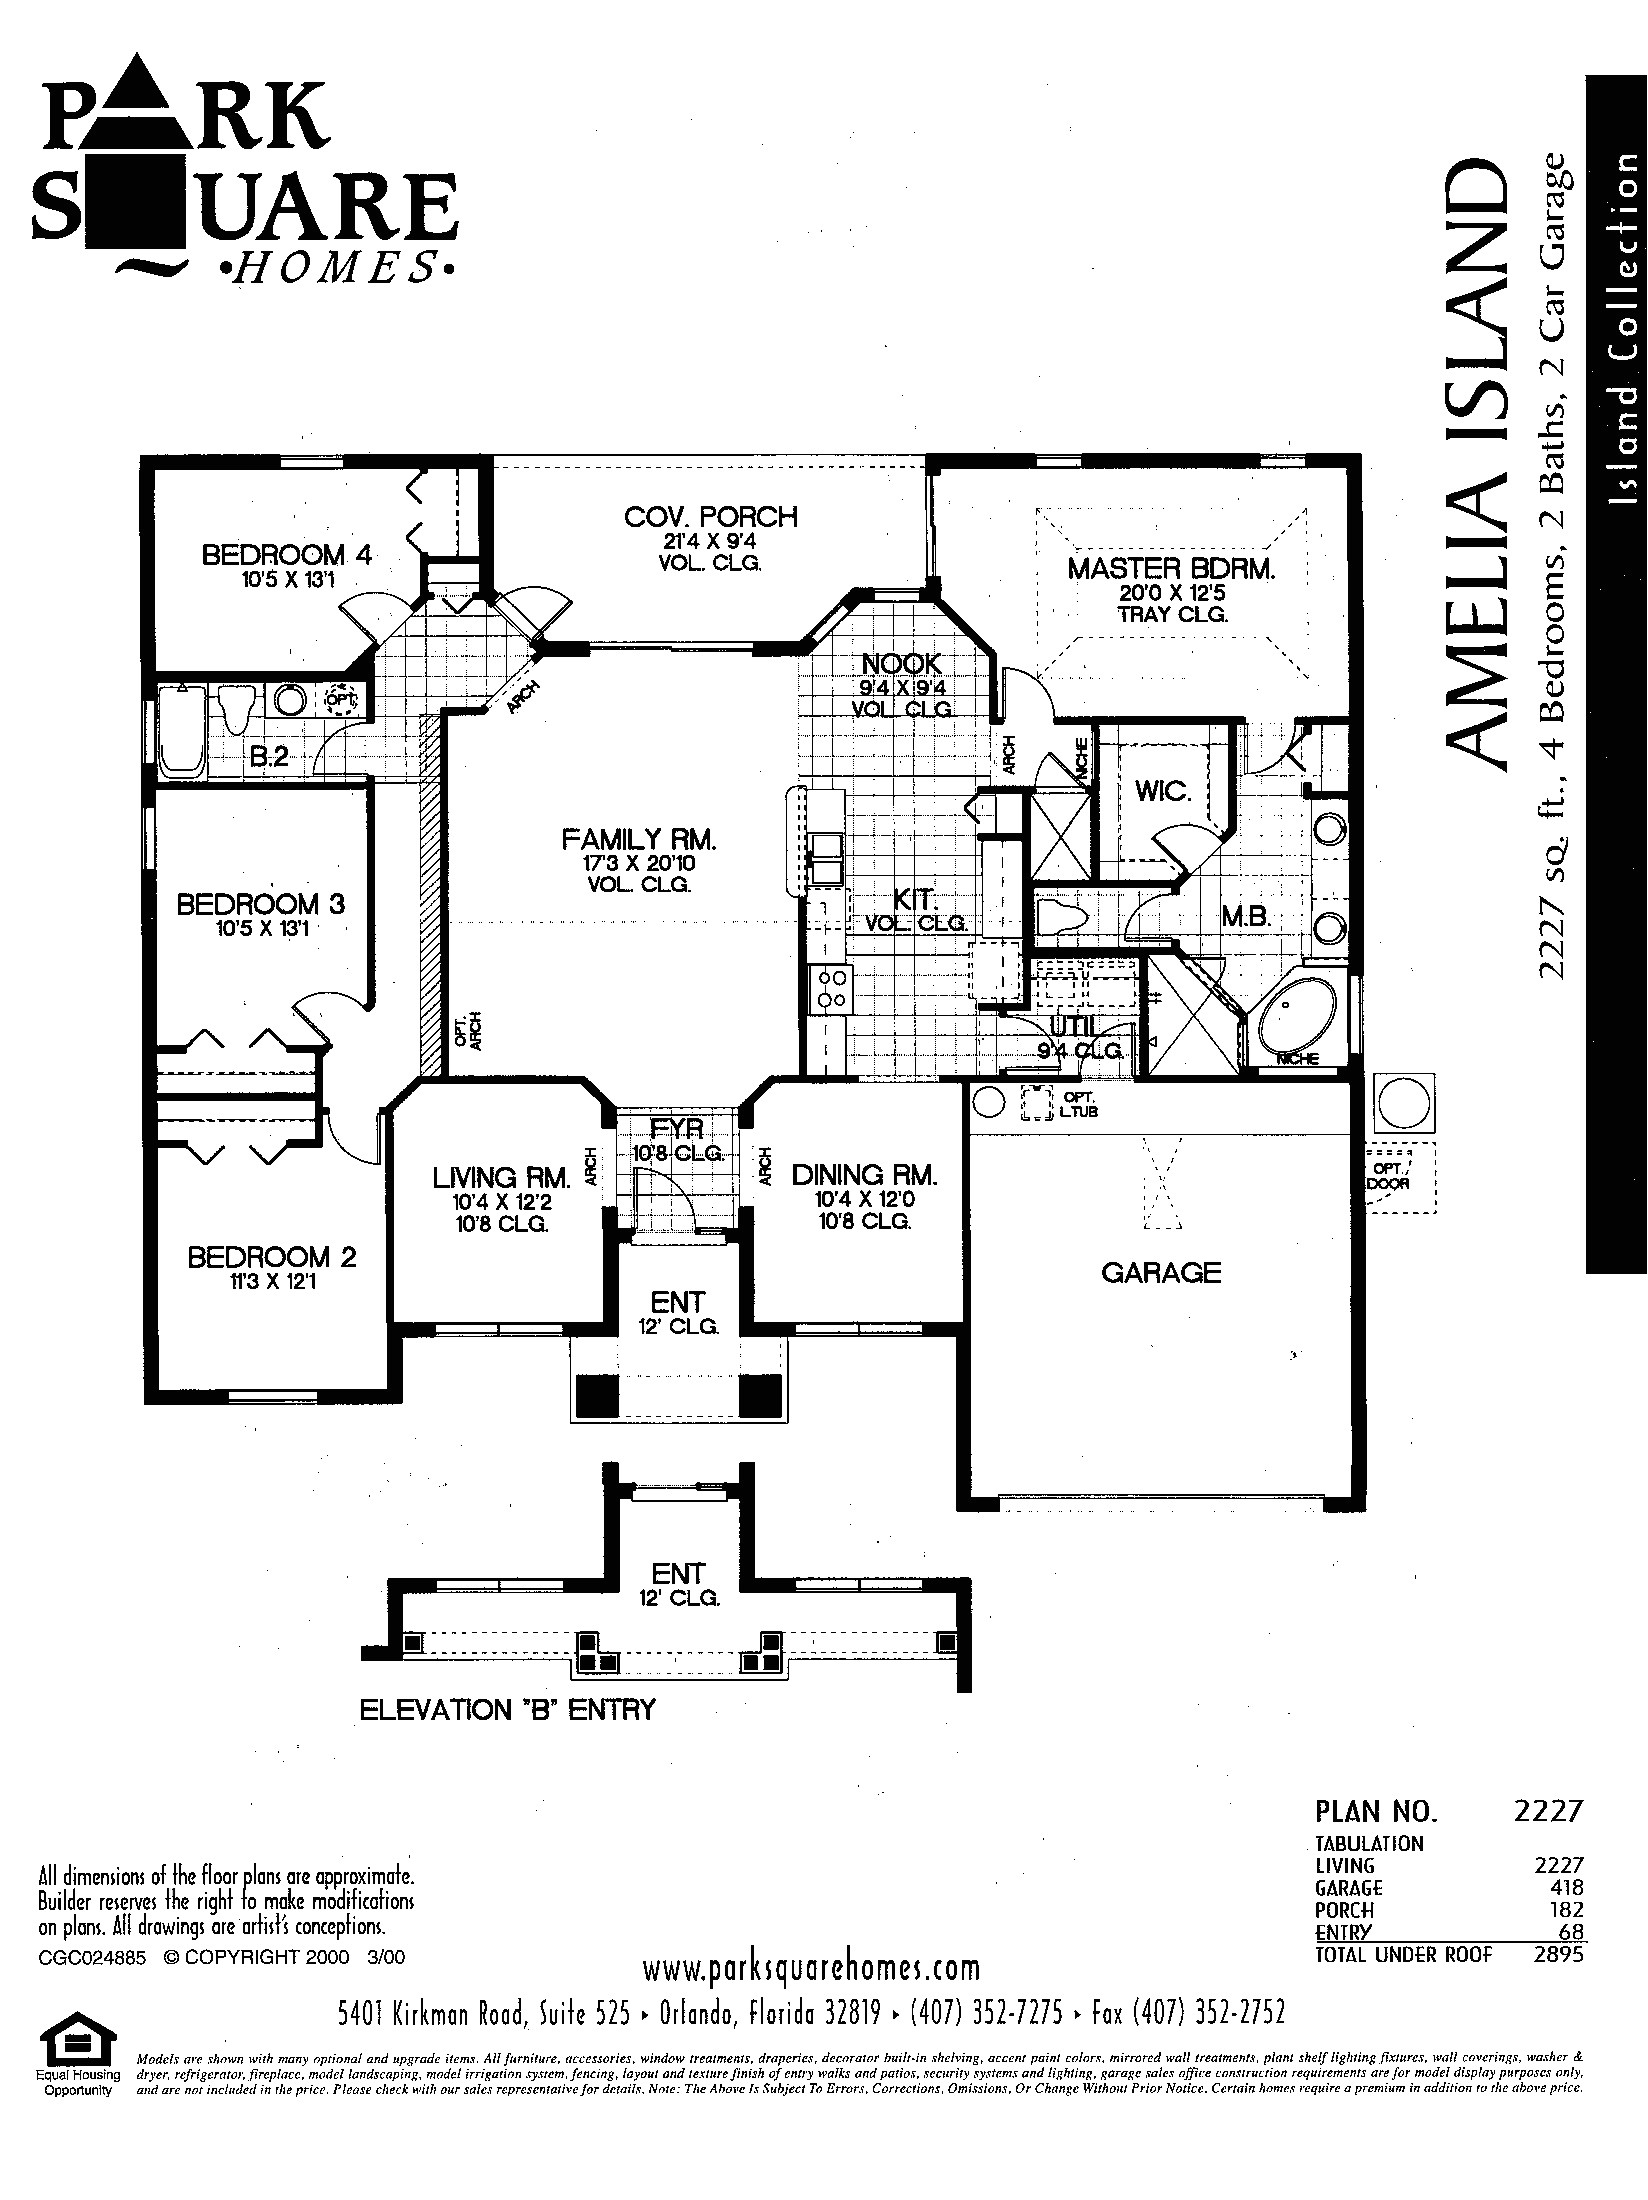 centex homes floor plans 2006